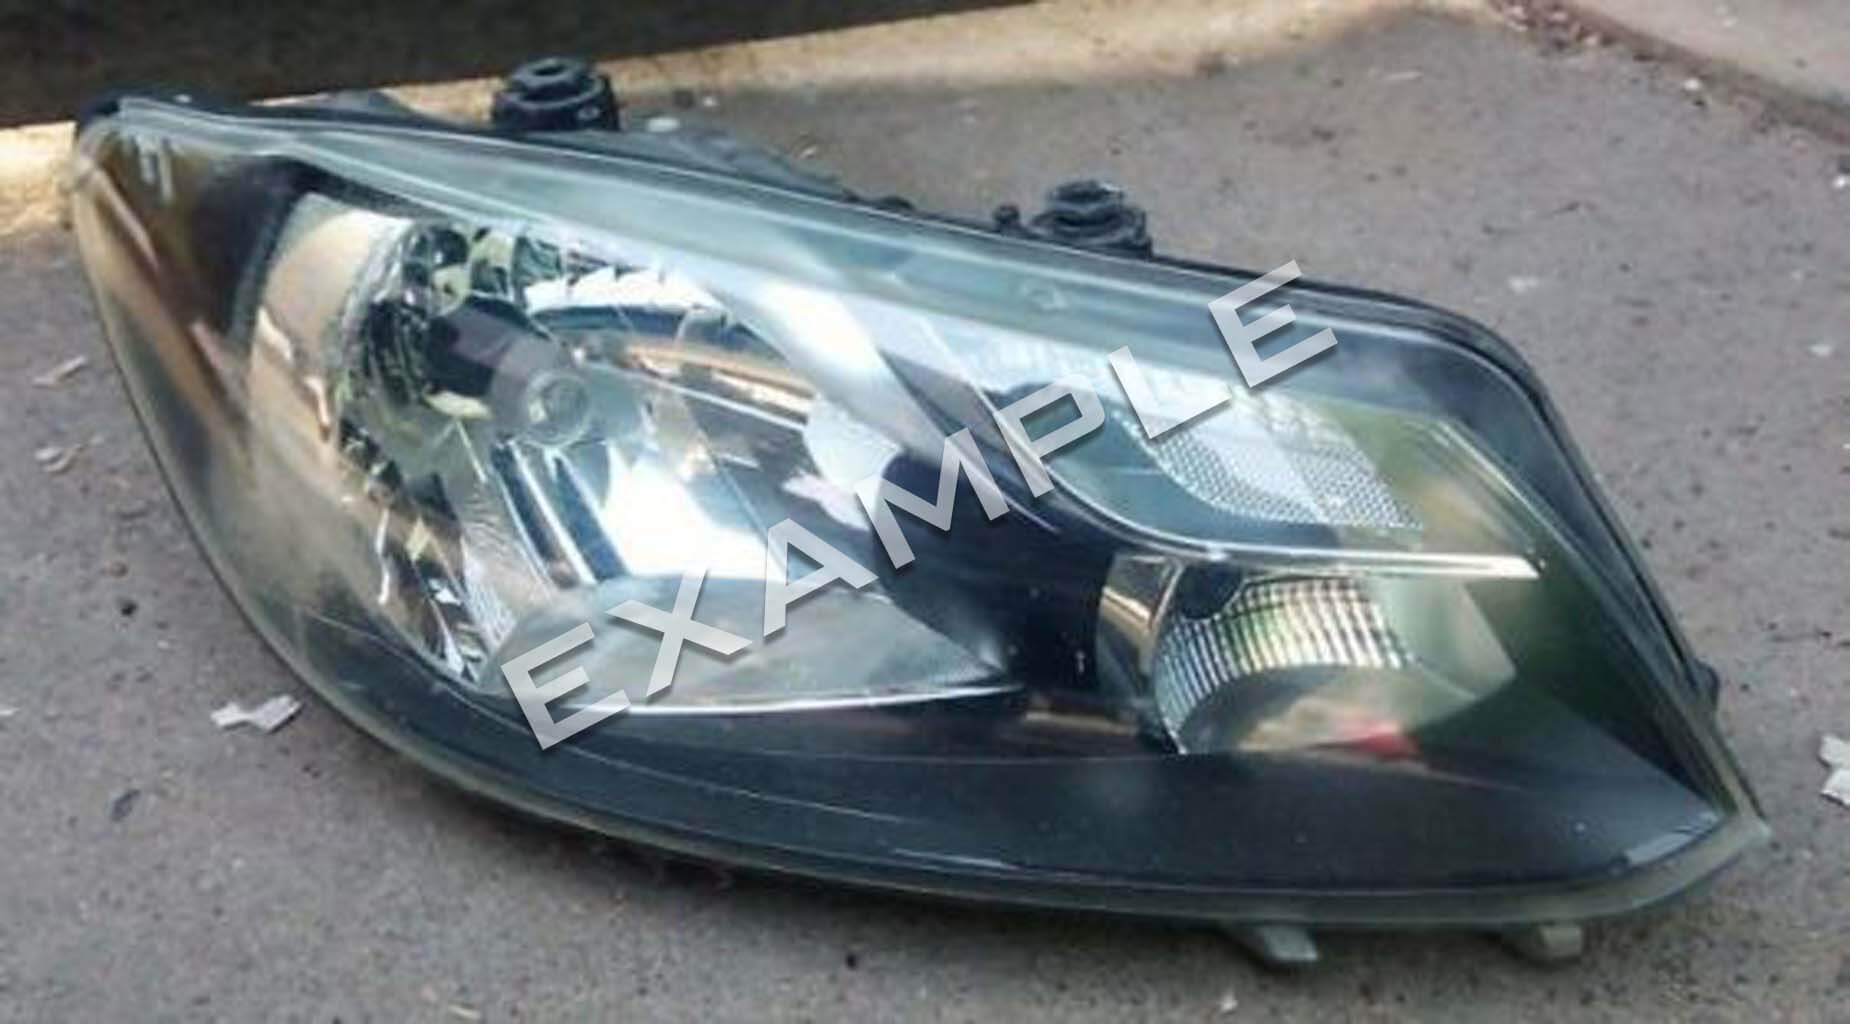 Caddy MK4 Headlights Upgrade Kit DRL Bulbs Philips Racing Vision